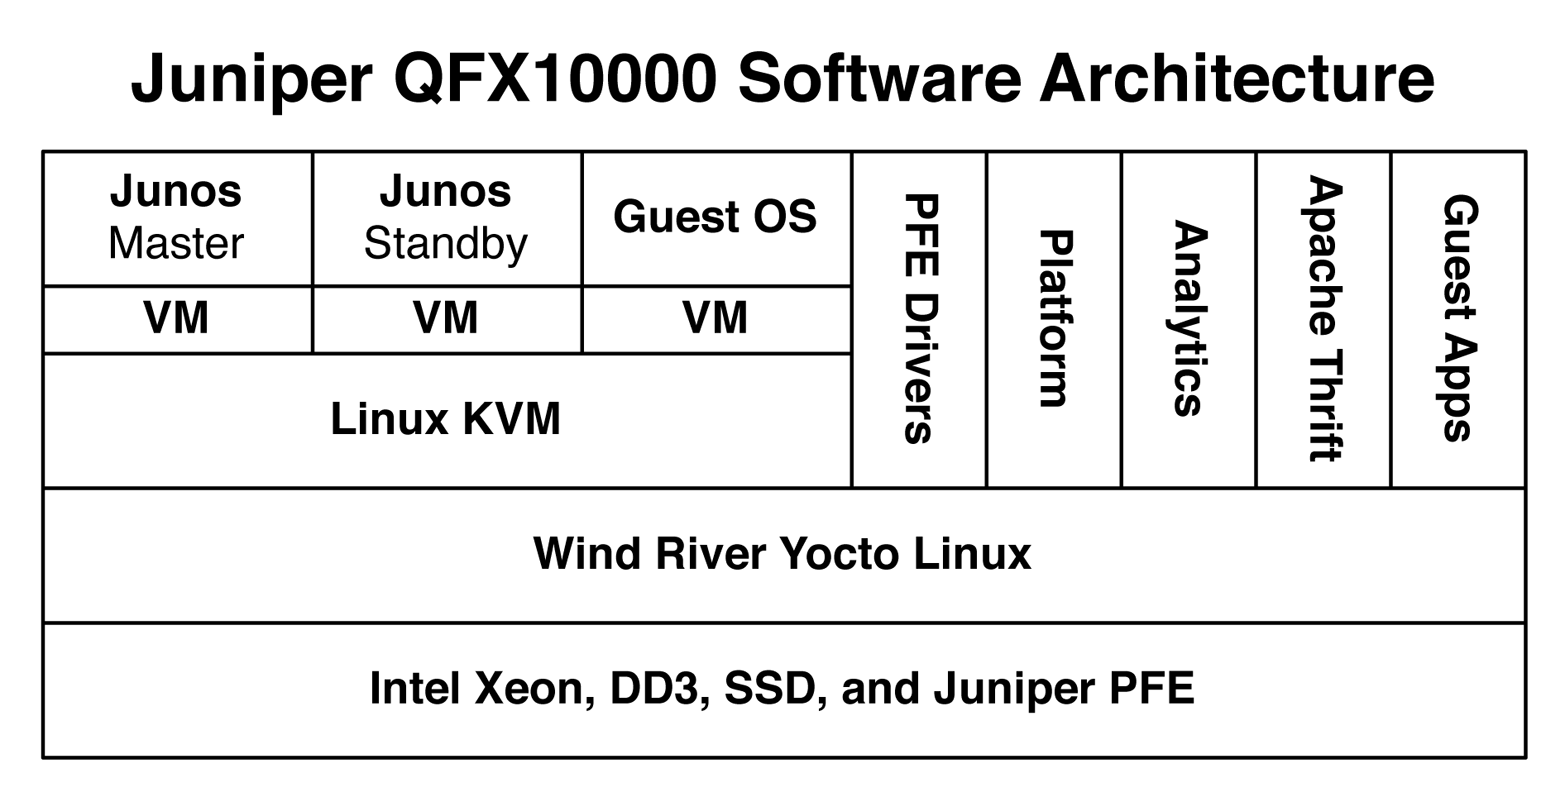 Juniper QFX10000 software architecture